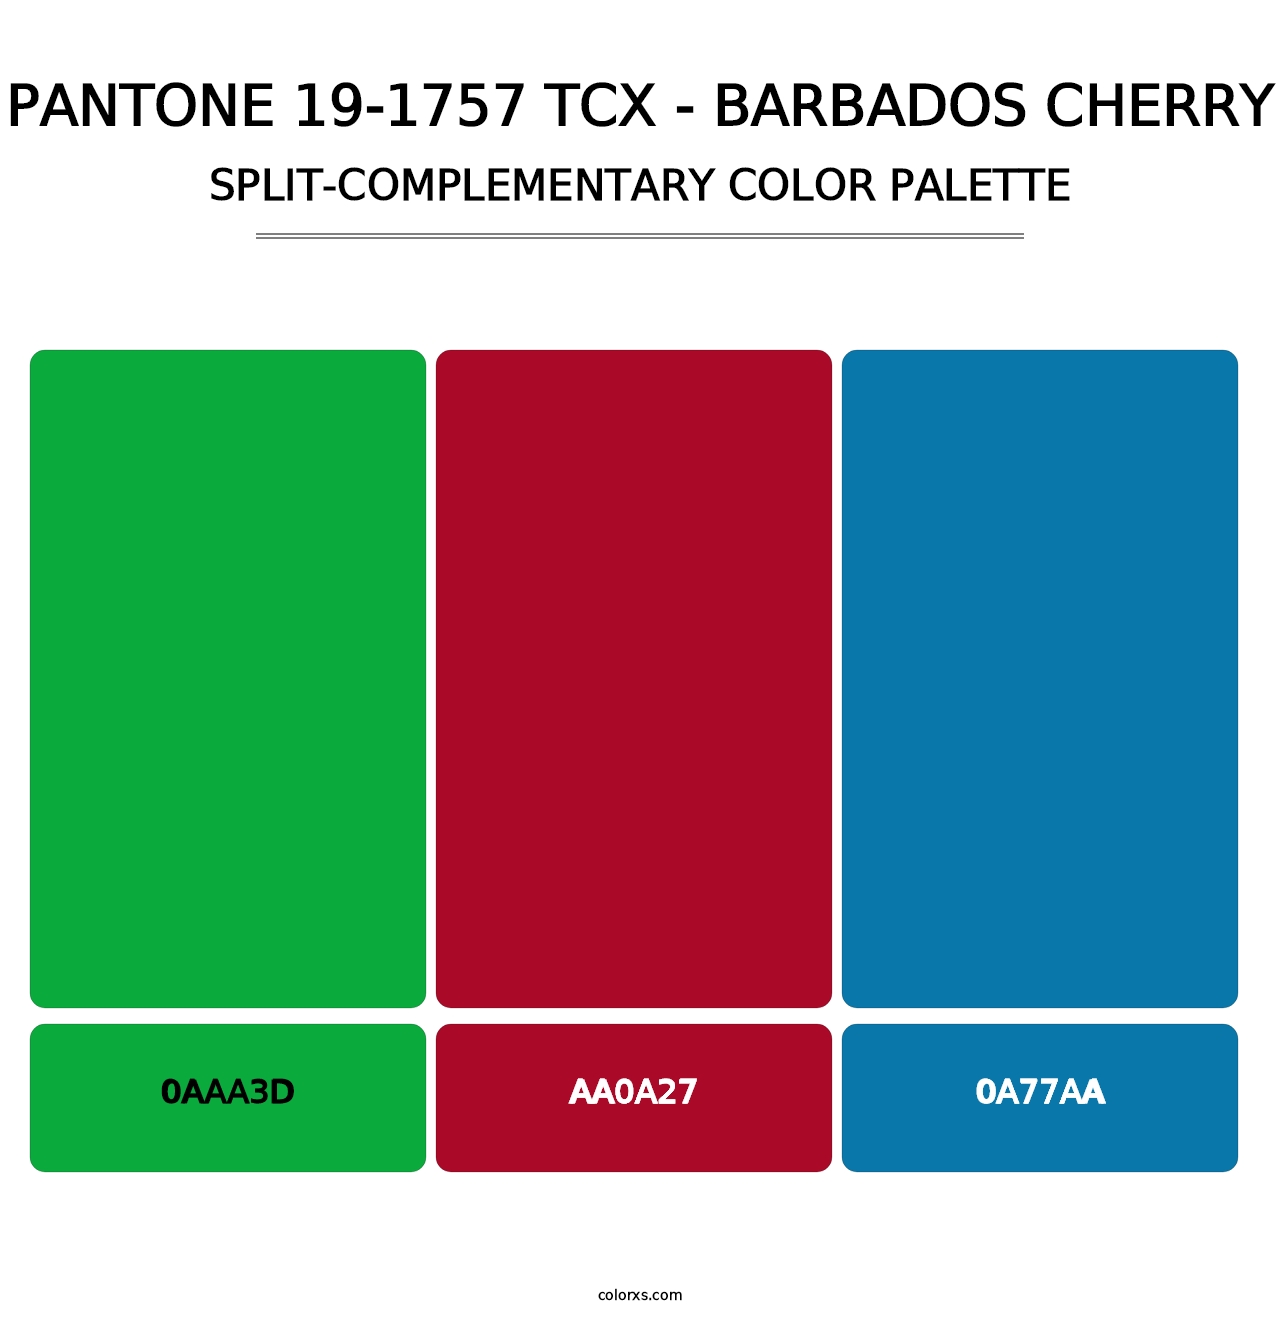 PANTONE 19-1757 TCX - Barbados Cherry - Split-Complementary Color Palette